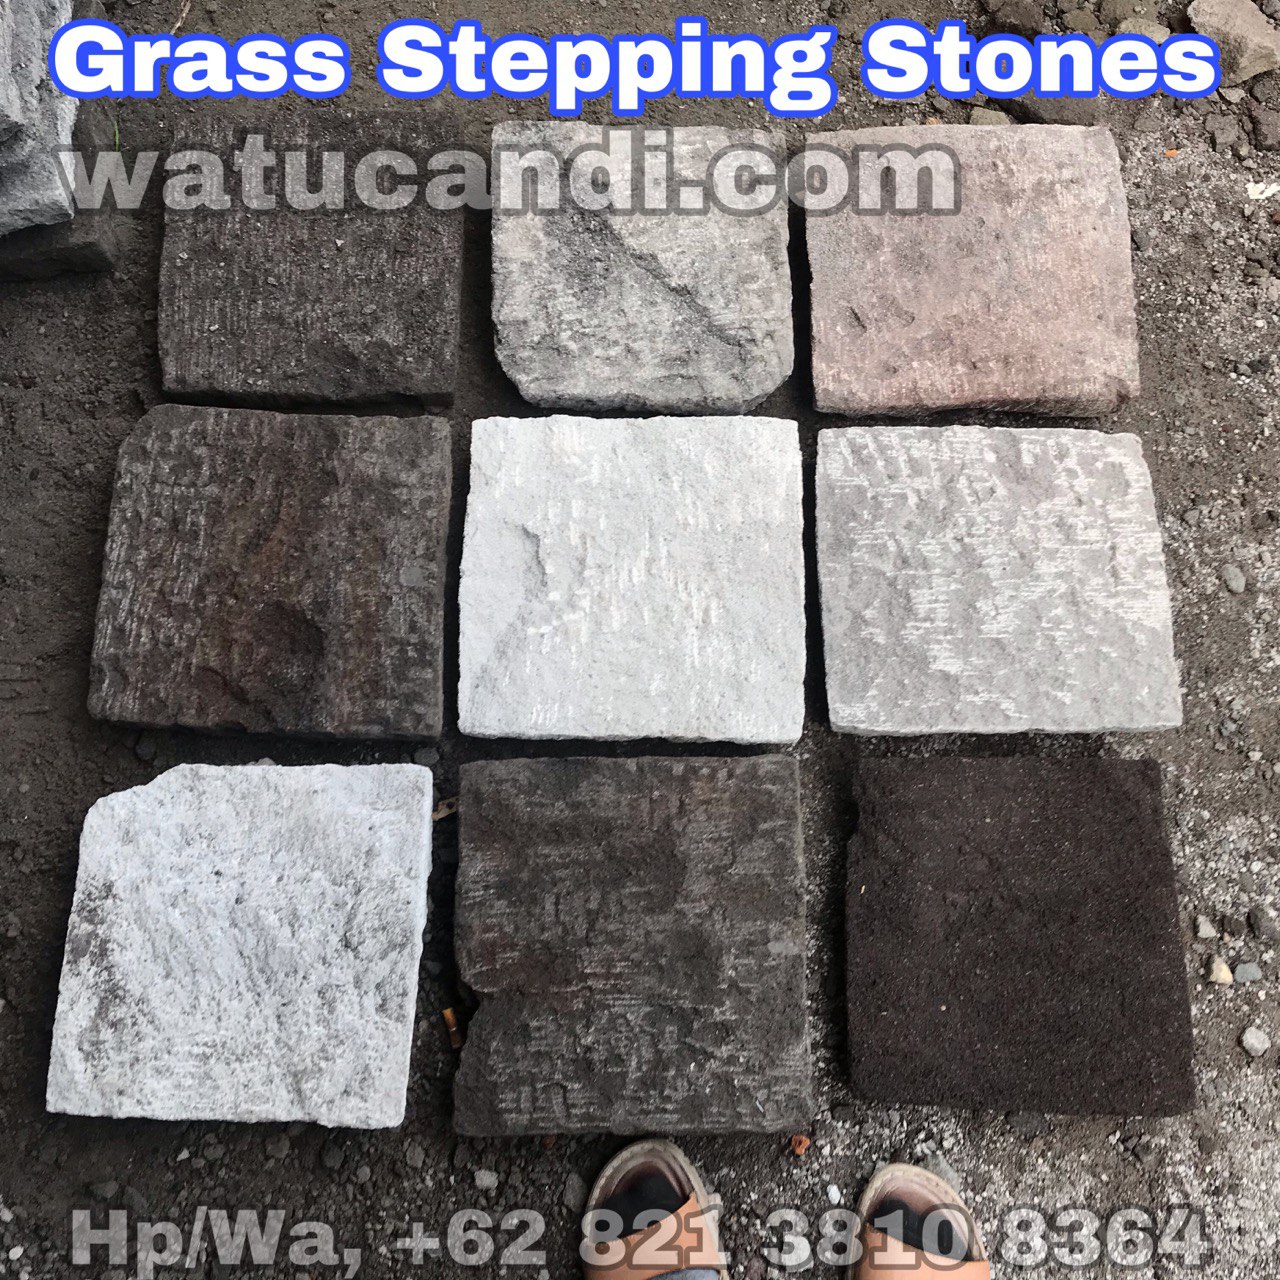 Grass Stepping Stones